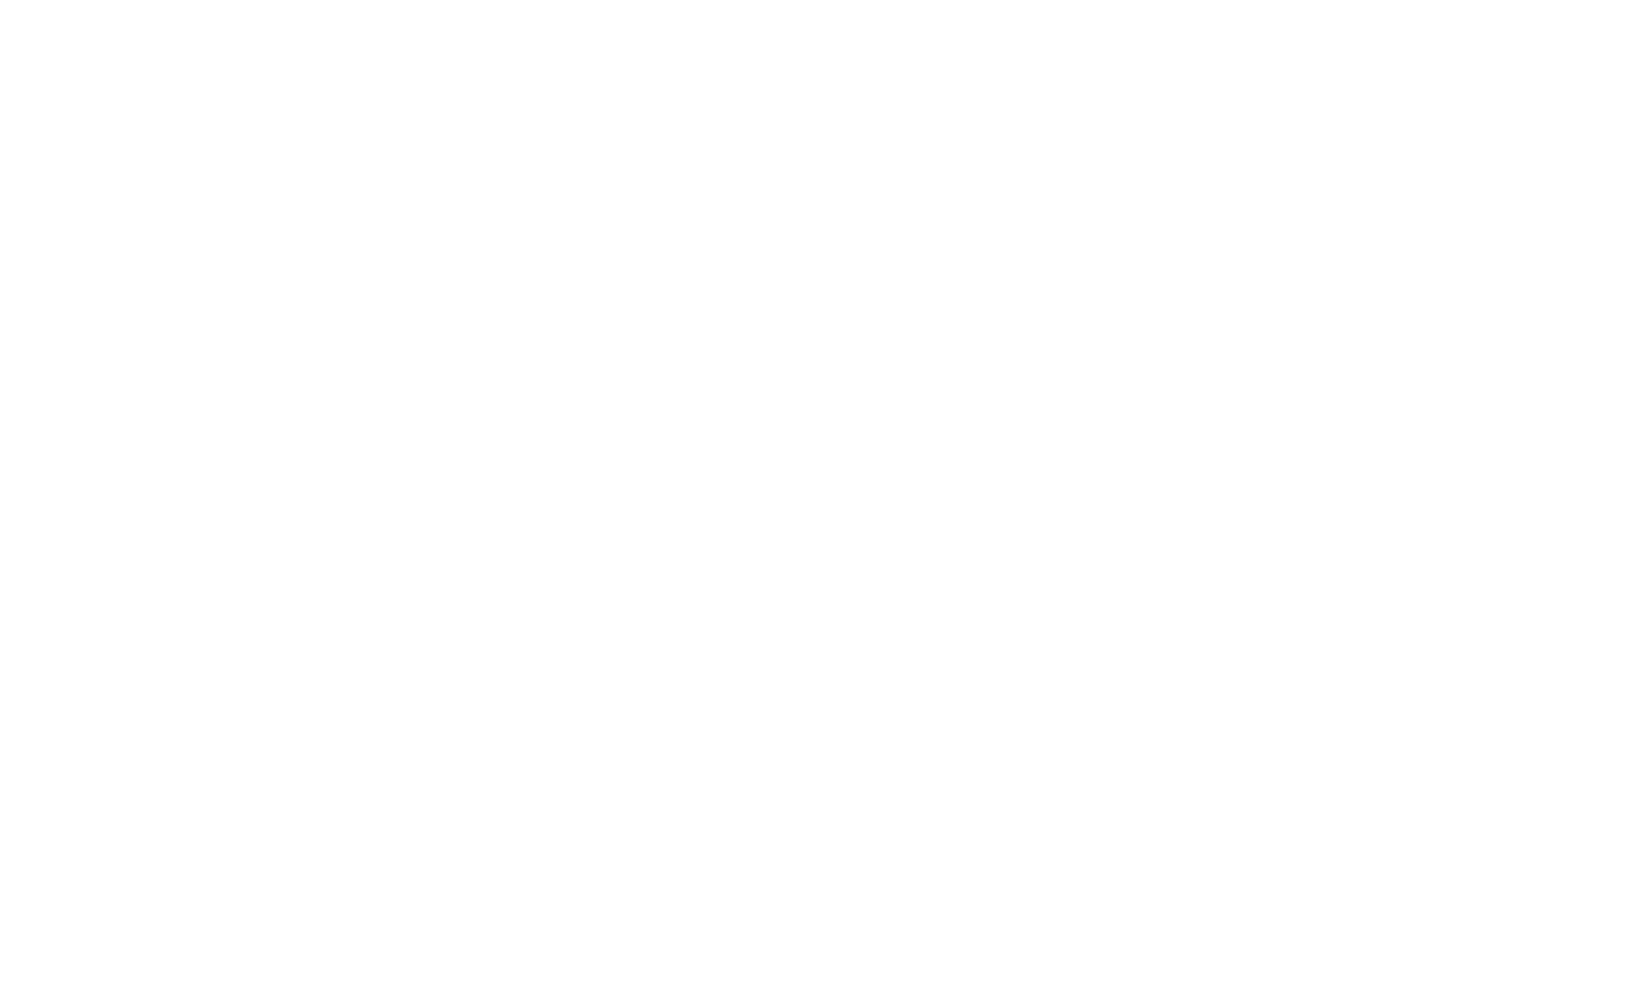 Alistair Craft